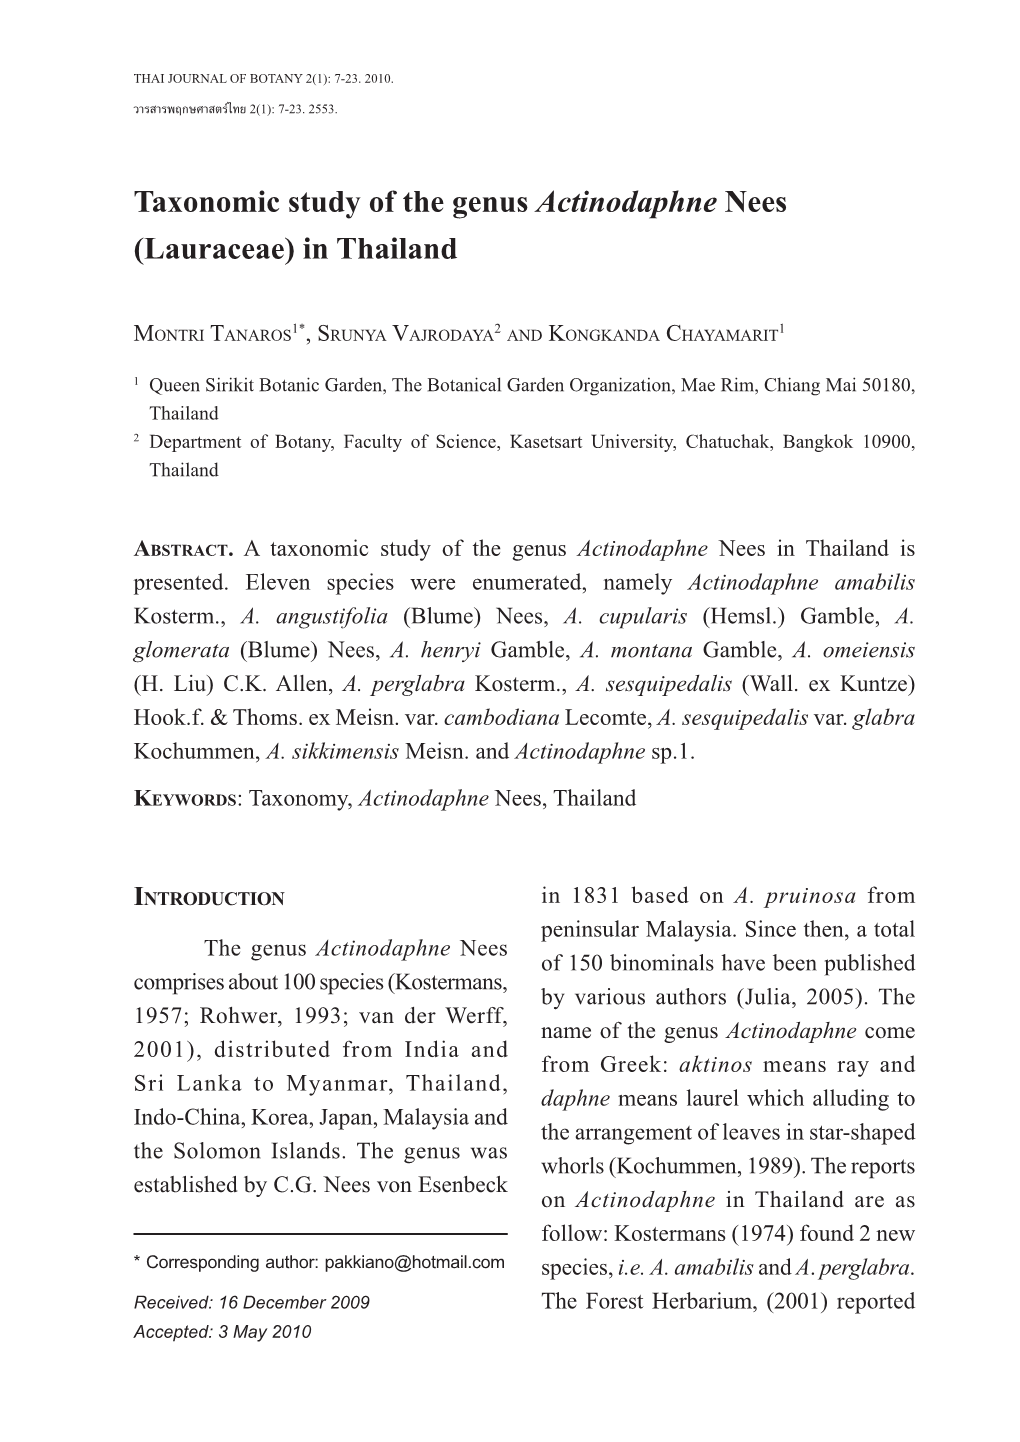 Taxonomic Study of the Genus Actinodaphne Nees (Lauraceae) in Thailand